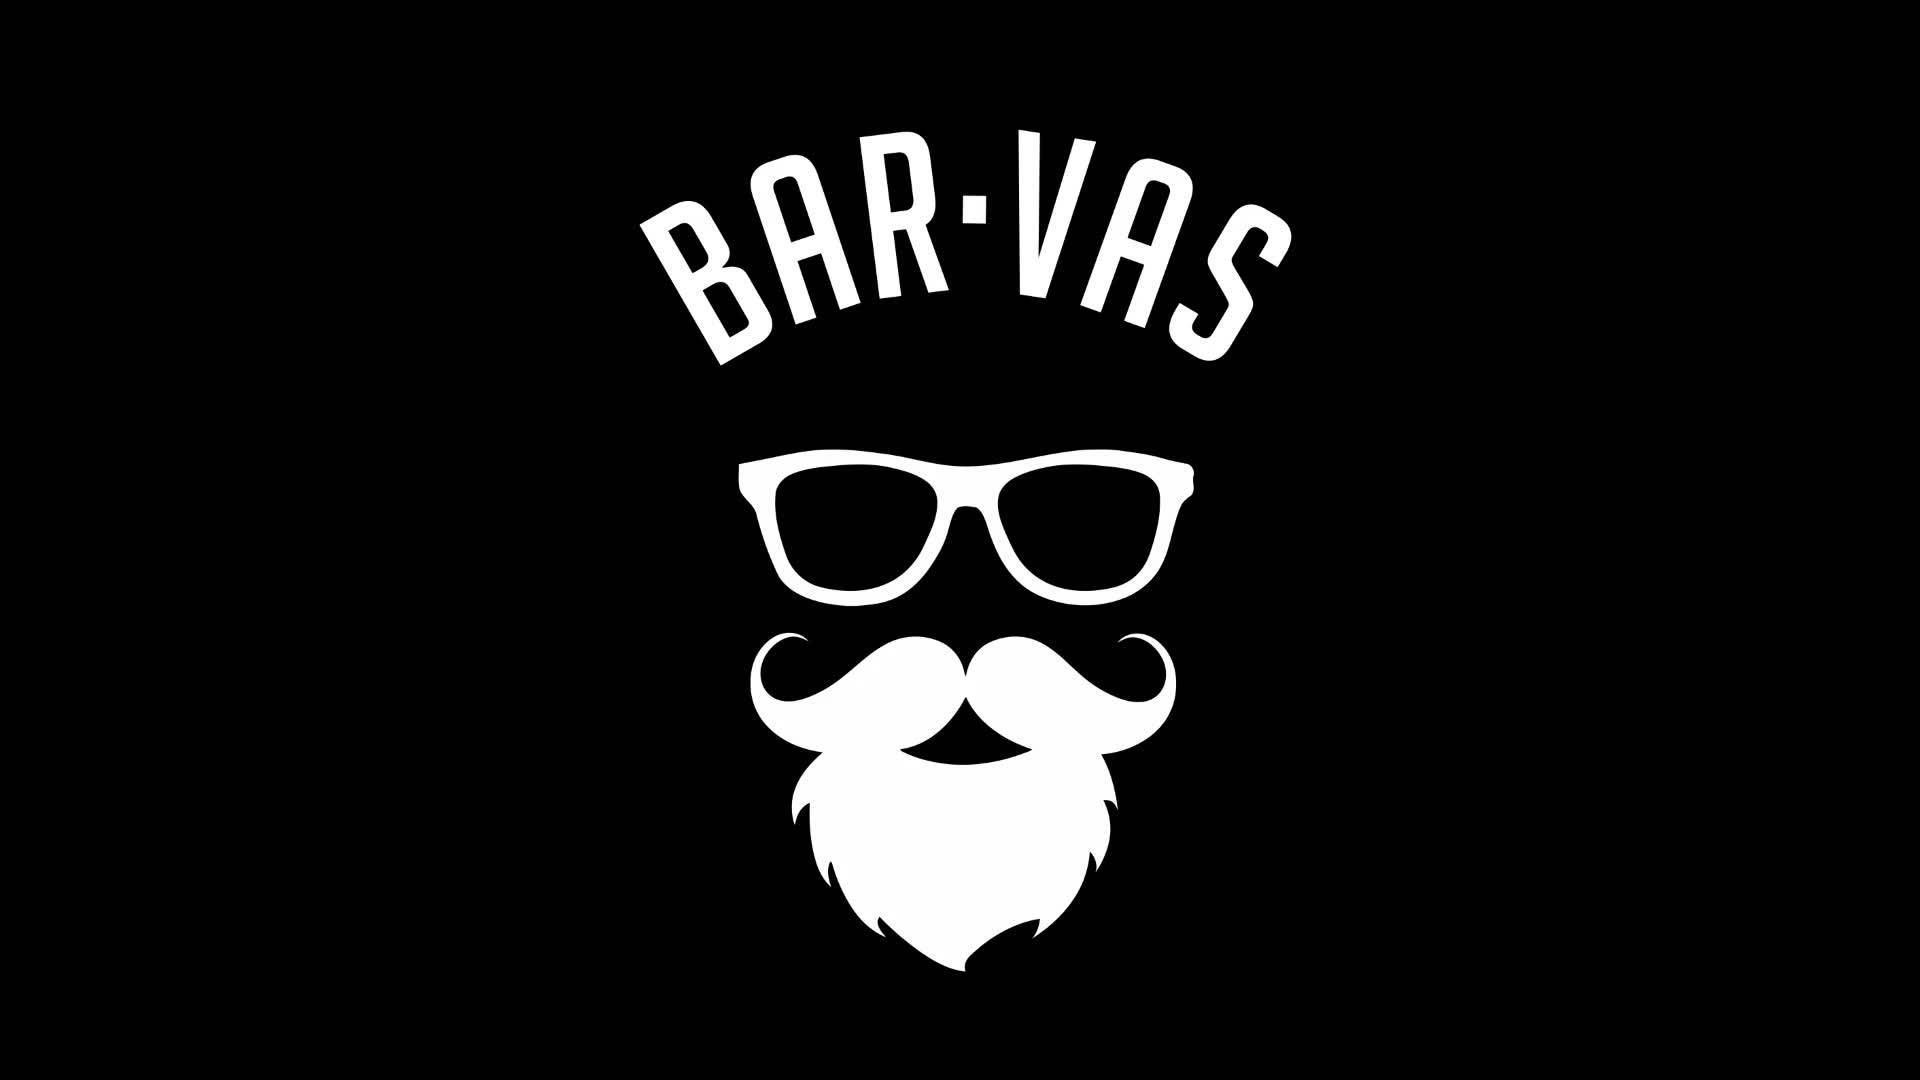 Captivating Hipster Bar Beard Logo Wallpaper